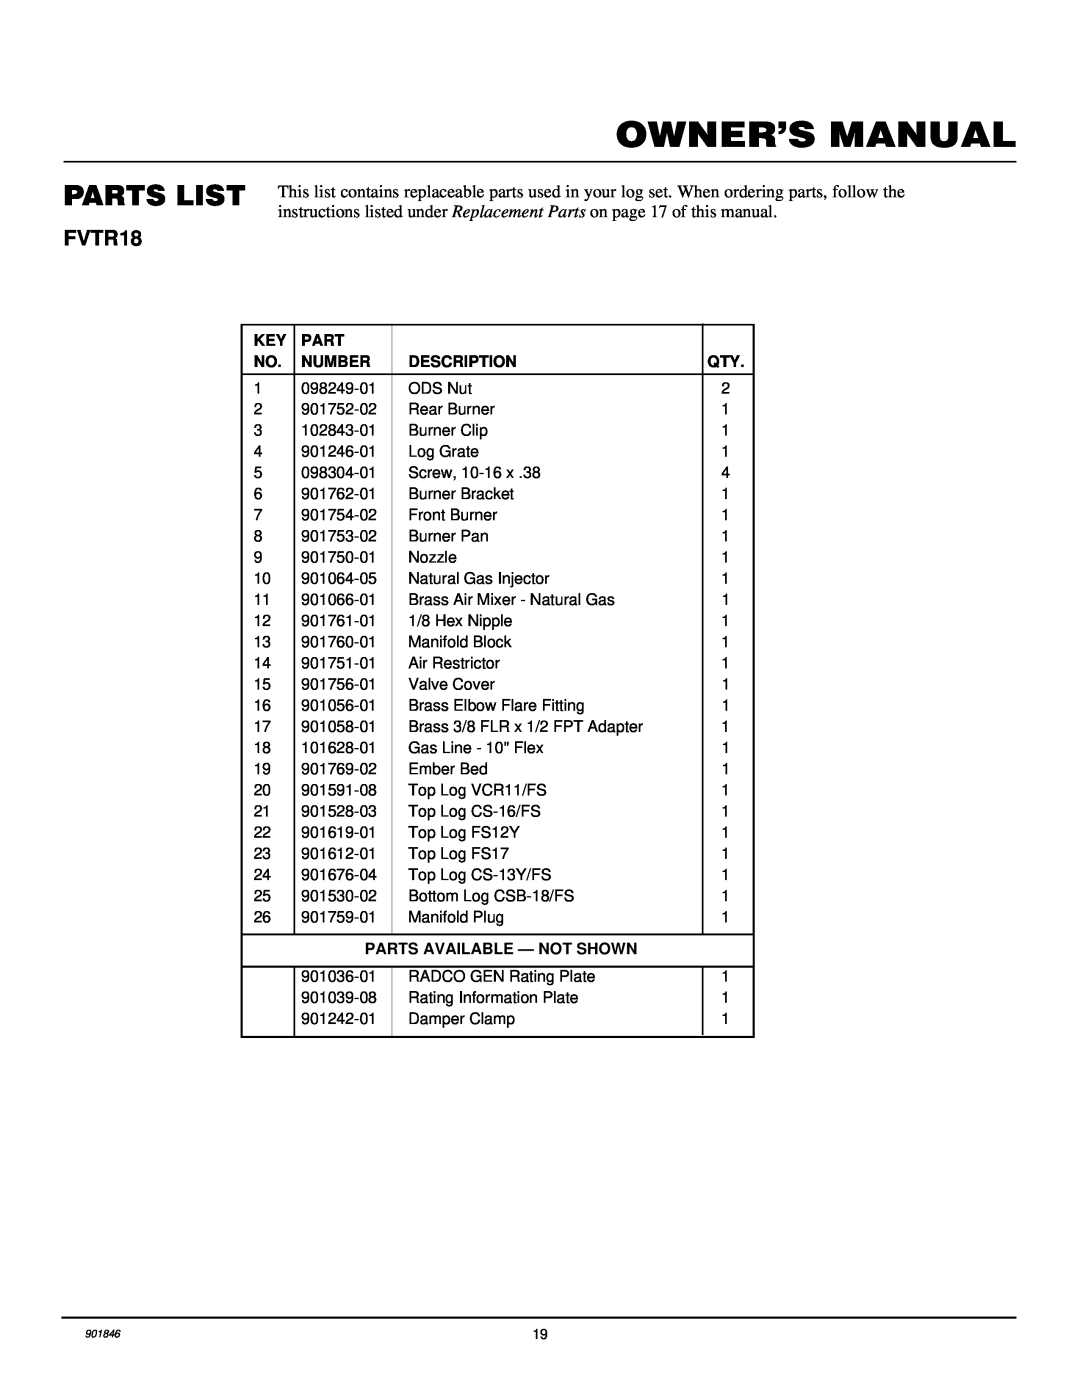 FMI FVTR24, FVTR18 installation manual Parts List, Number, Description, Parts Available - Not Shown 